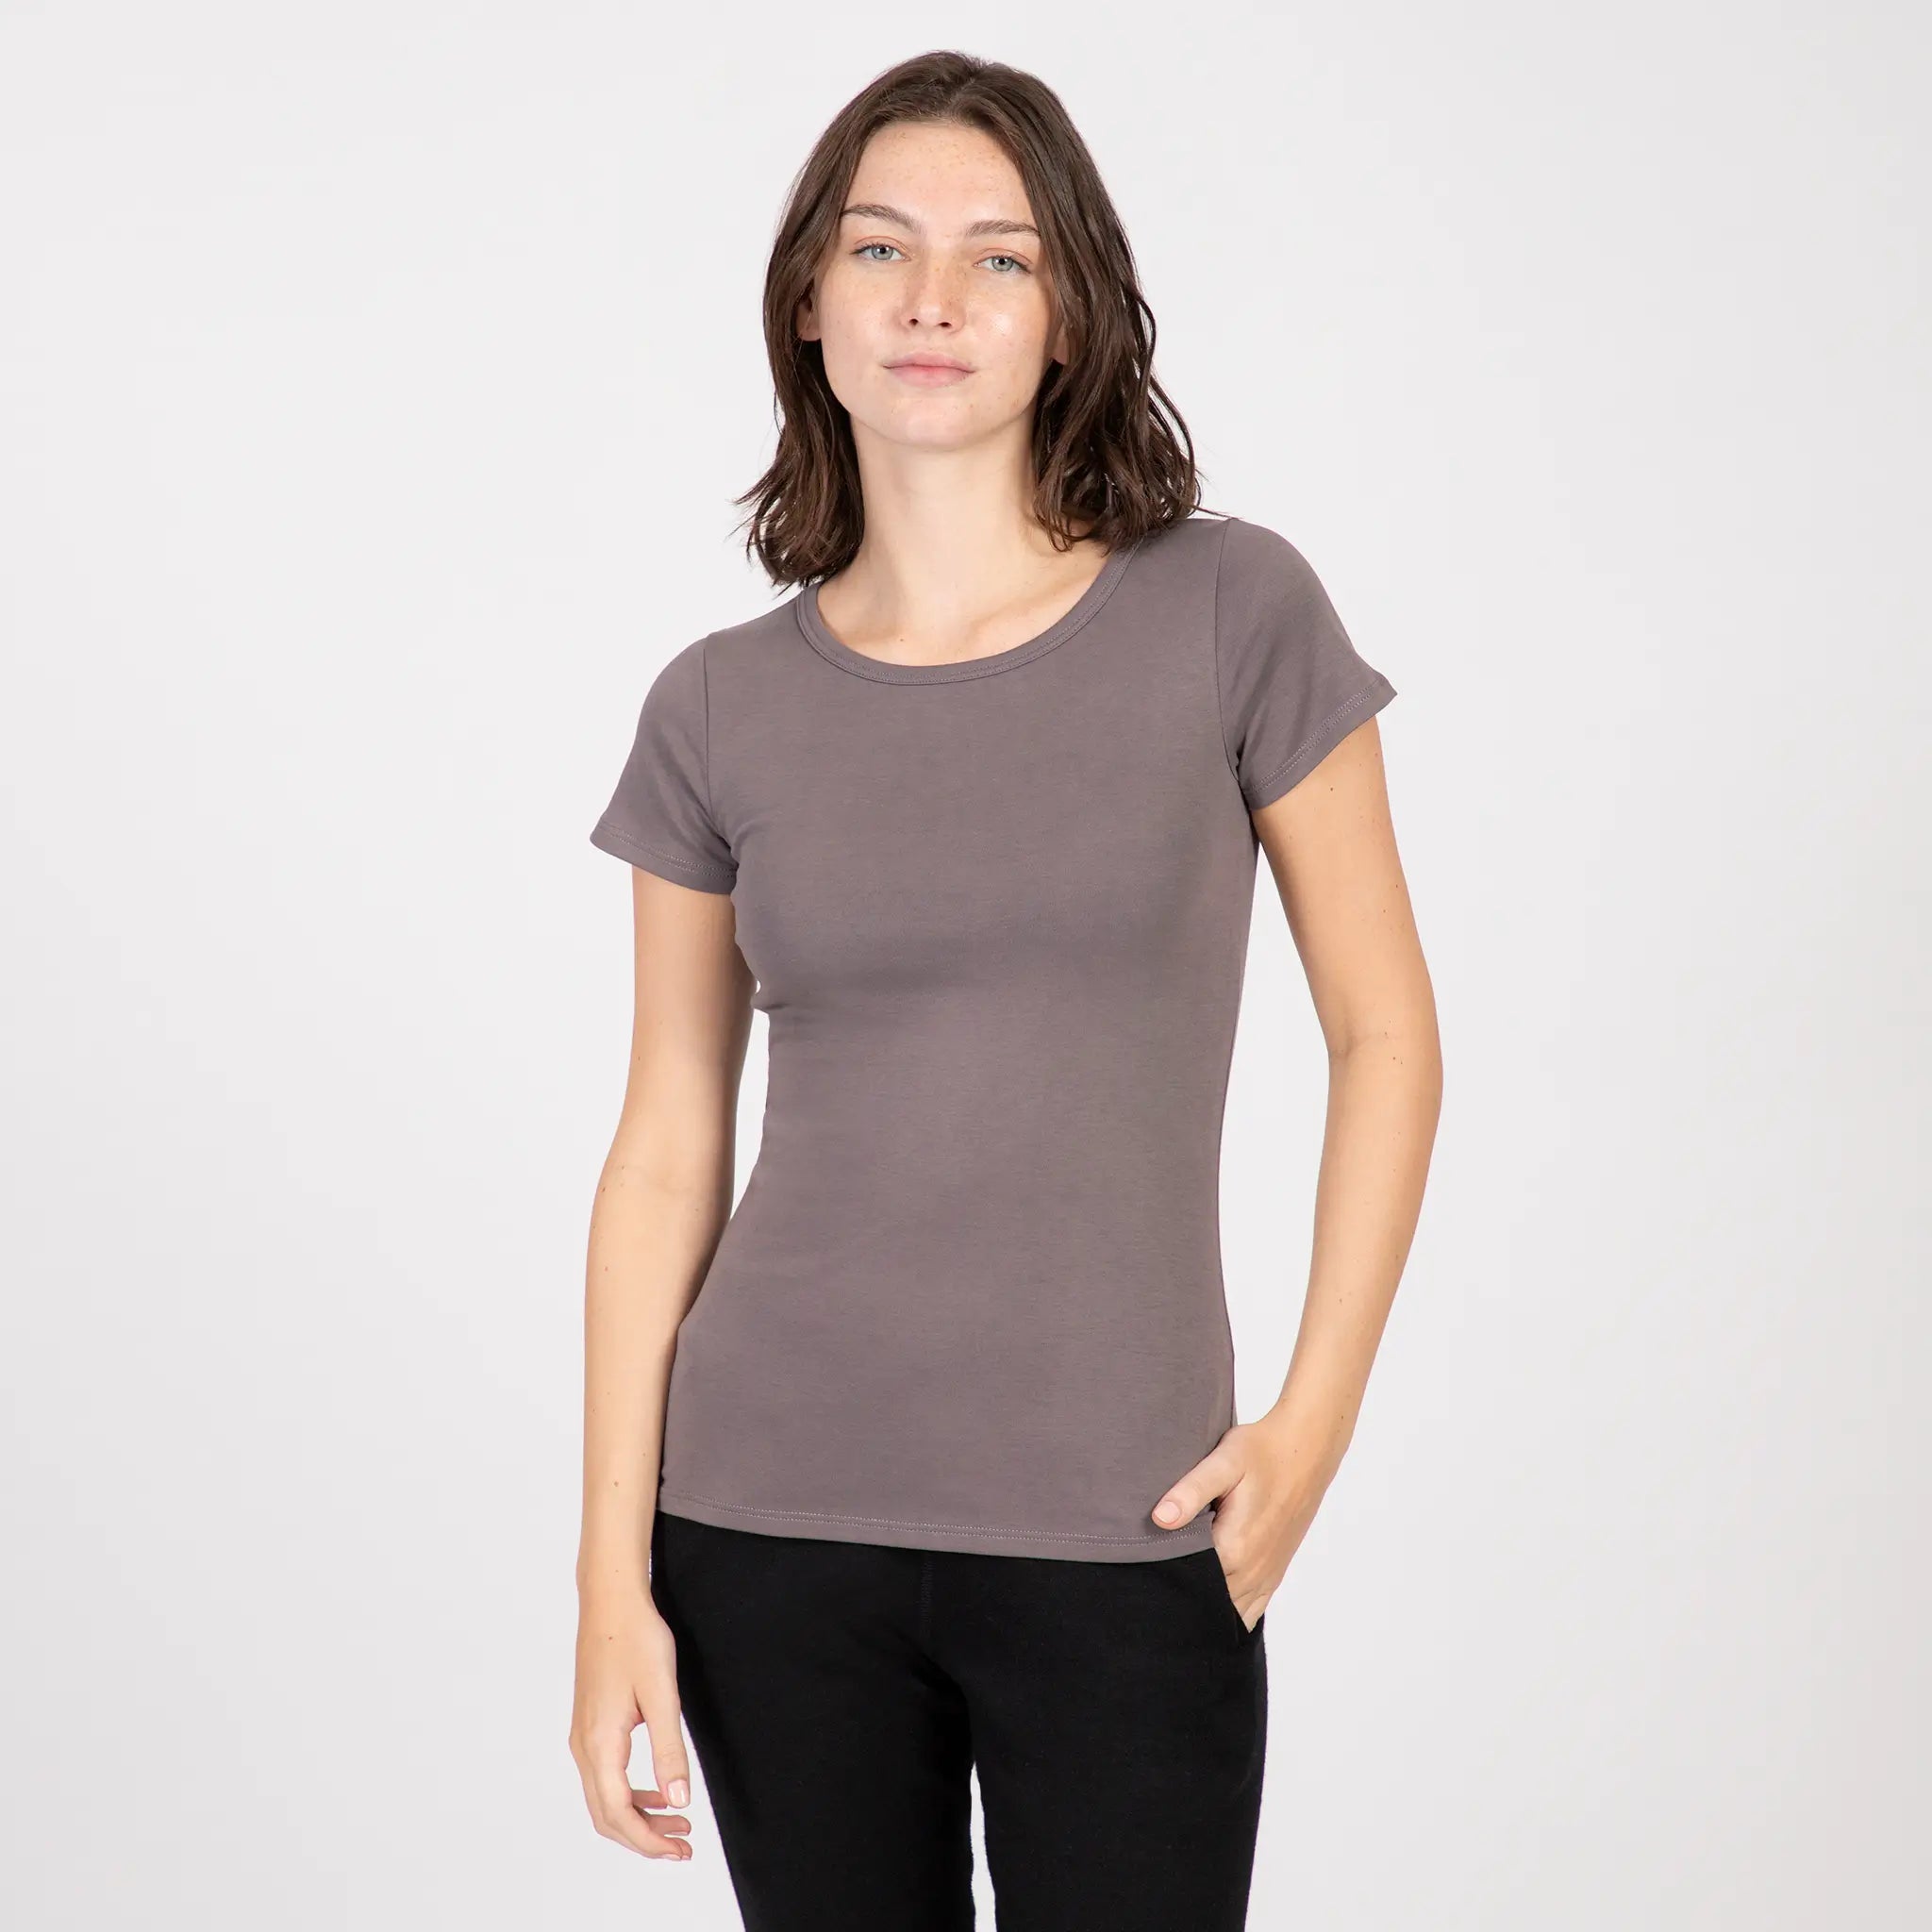 womens single origin tshirt crew neck color natural gray